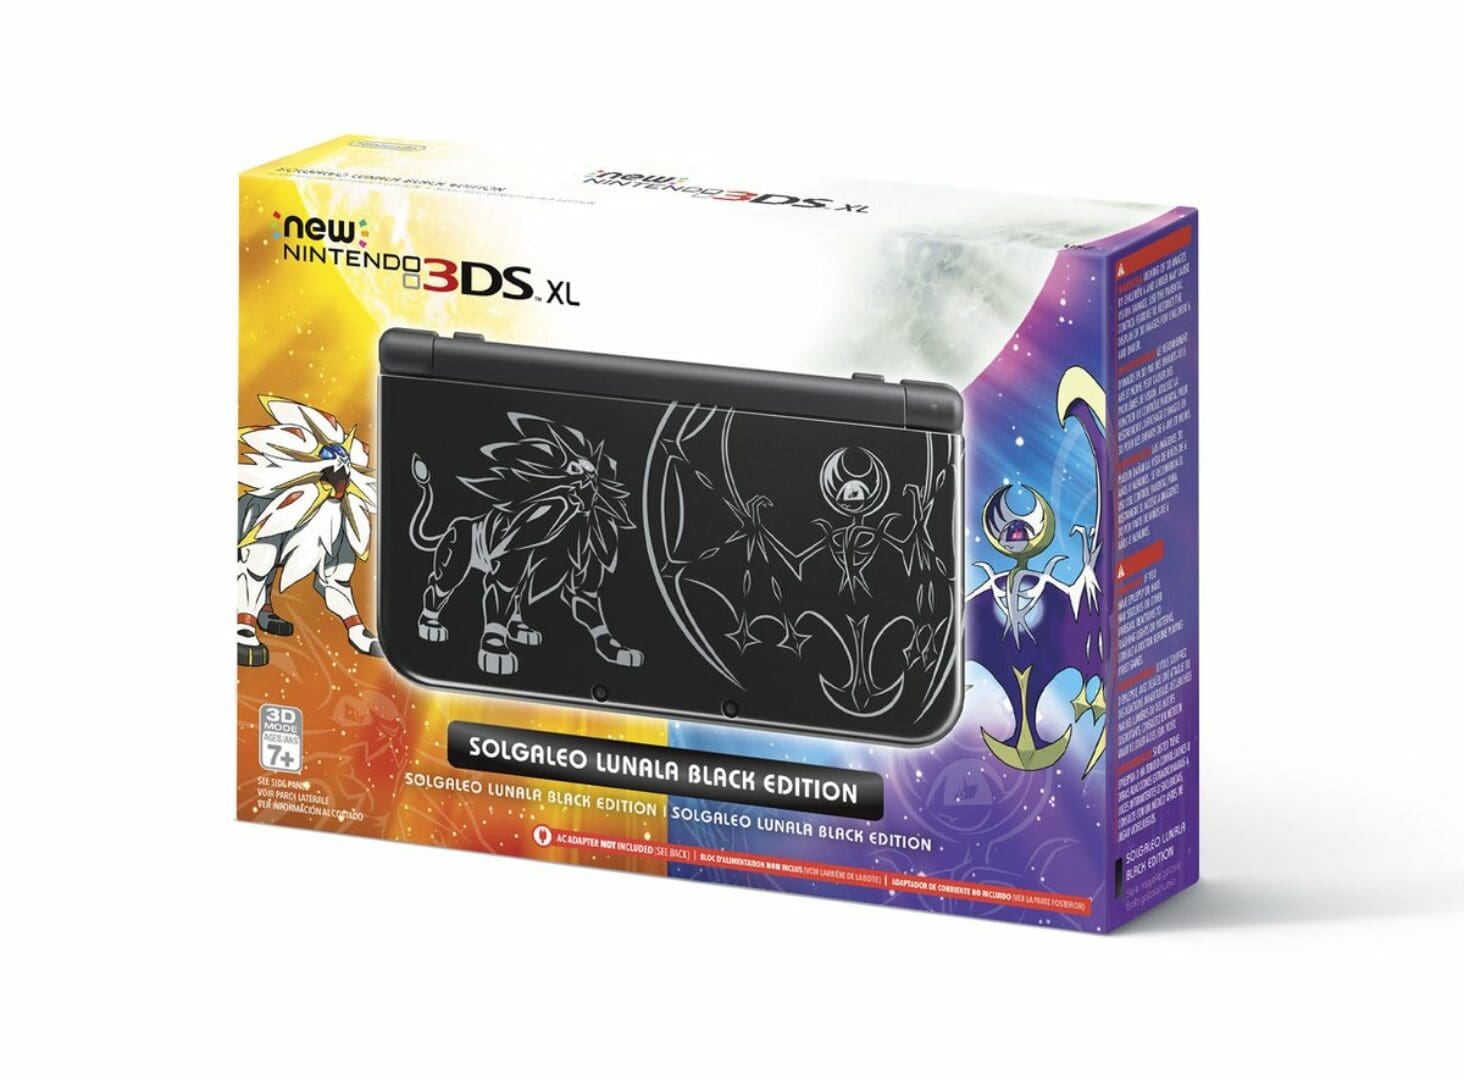 Pokemon Sun & Moon “New” 3DS XL Announced